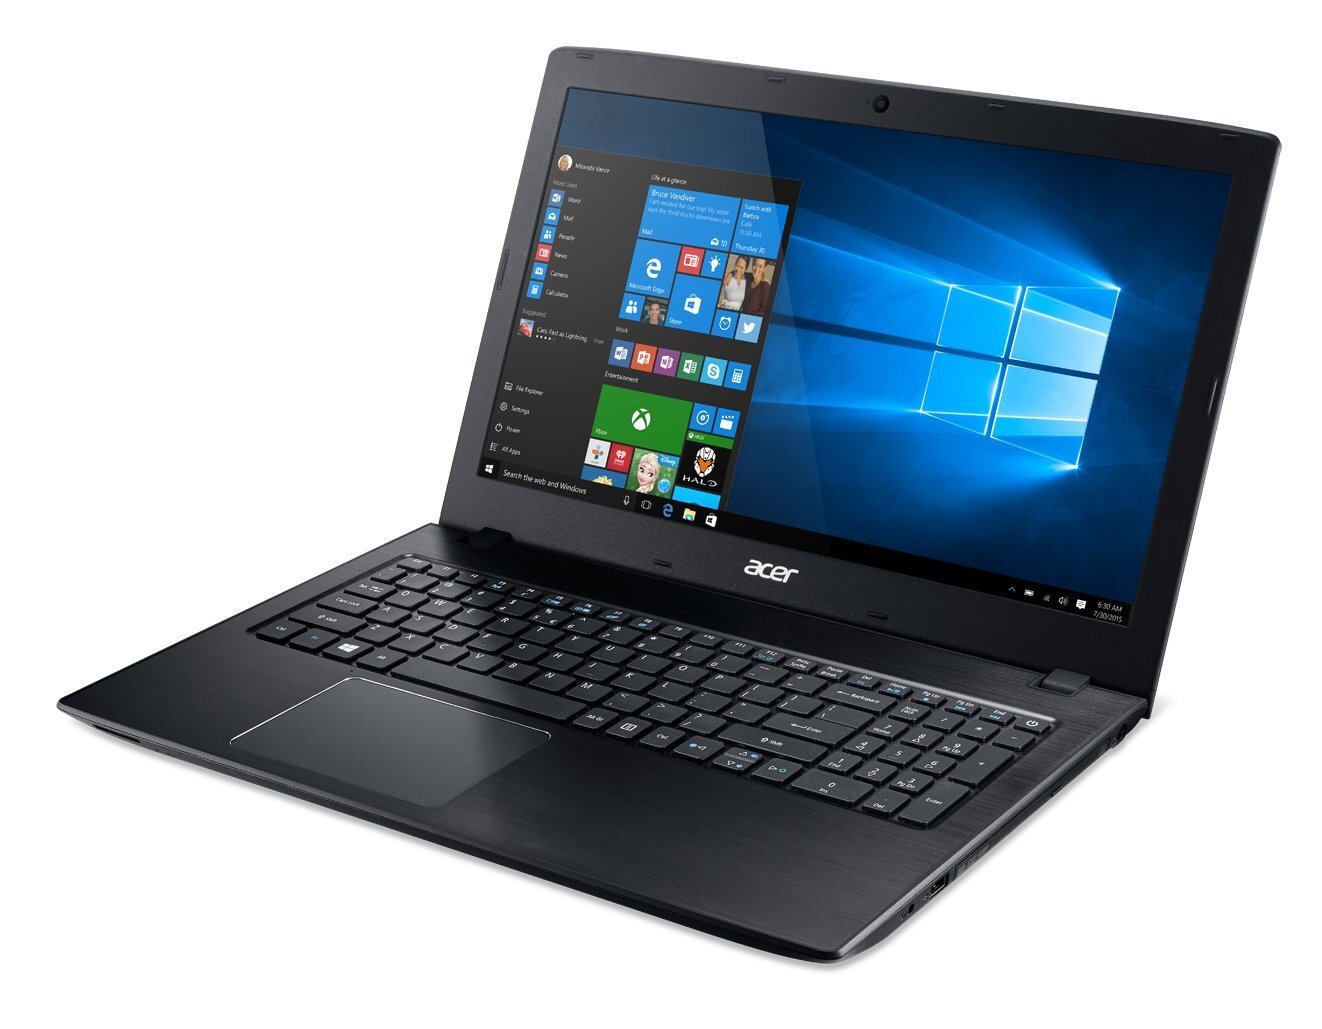 Laptop Acer Aspire E5-575G-73DR NX.GDTSV.001 - Intel core i7, 8GB RAM, HDD 1TB, Nvidia Geforce 940MX 1GB, 15.6 inch